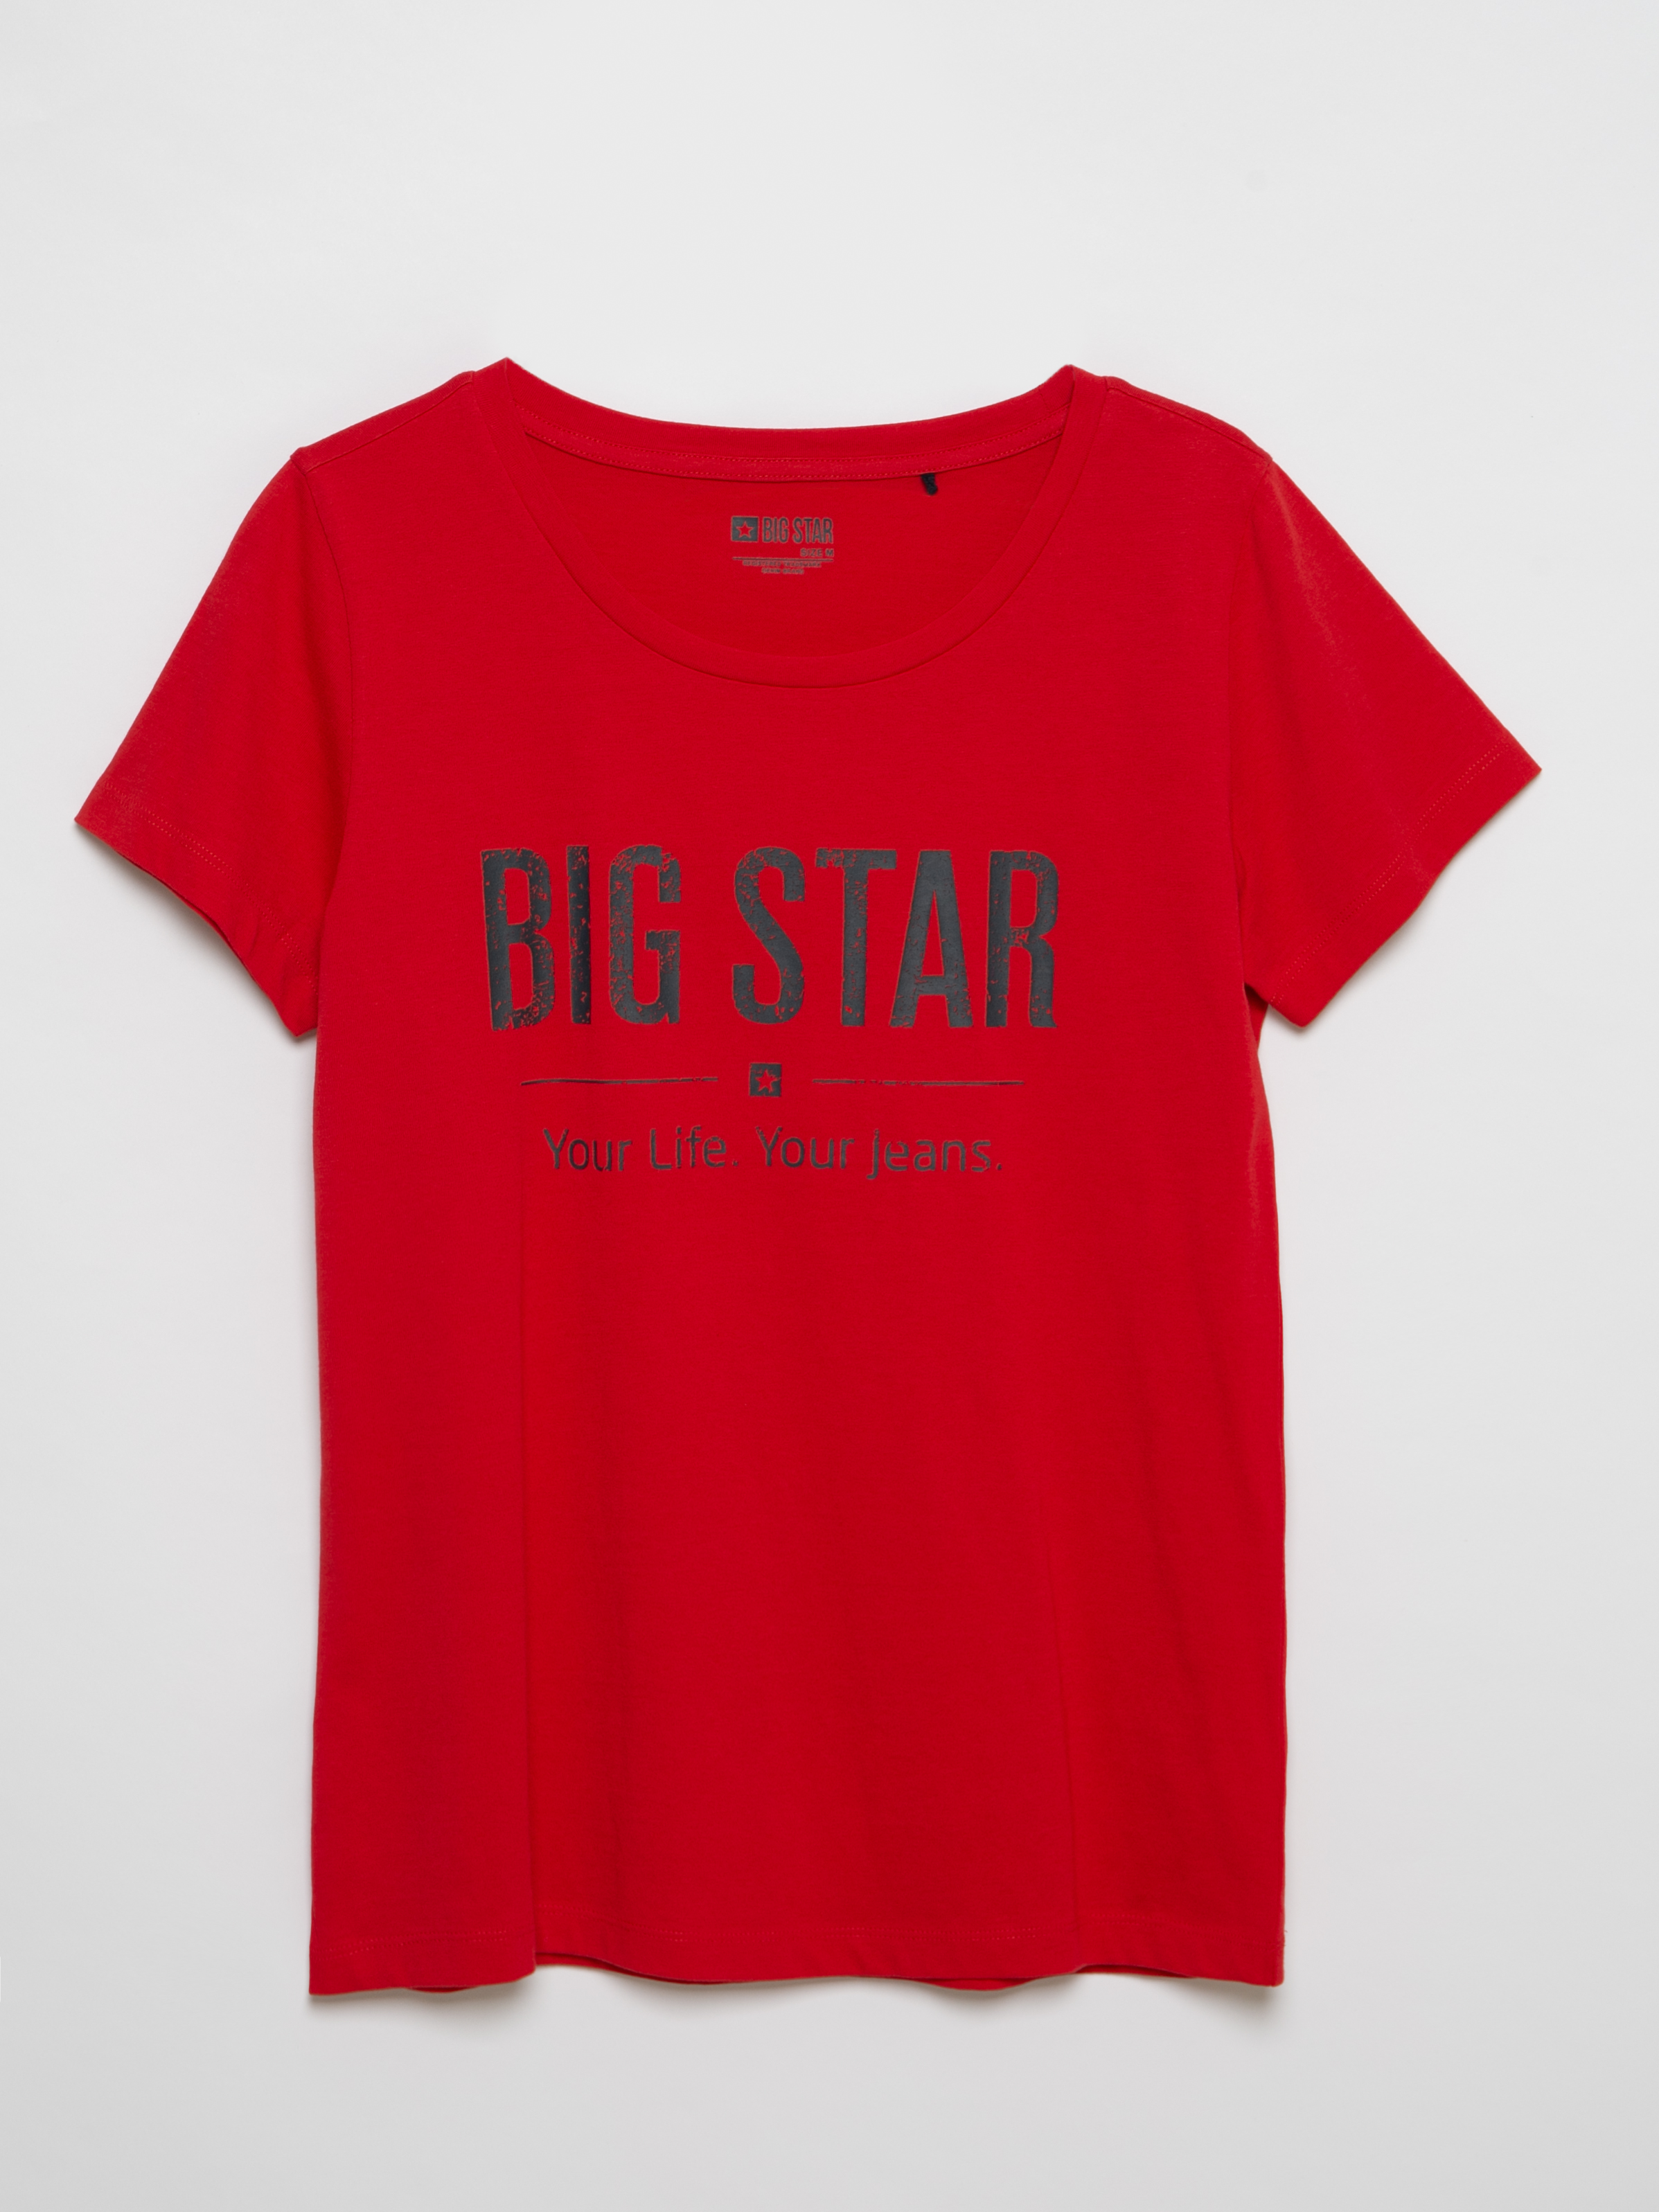 Big Star Woman's T-shirt 152084  603